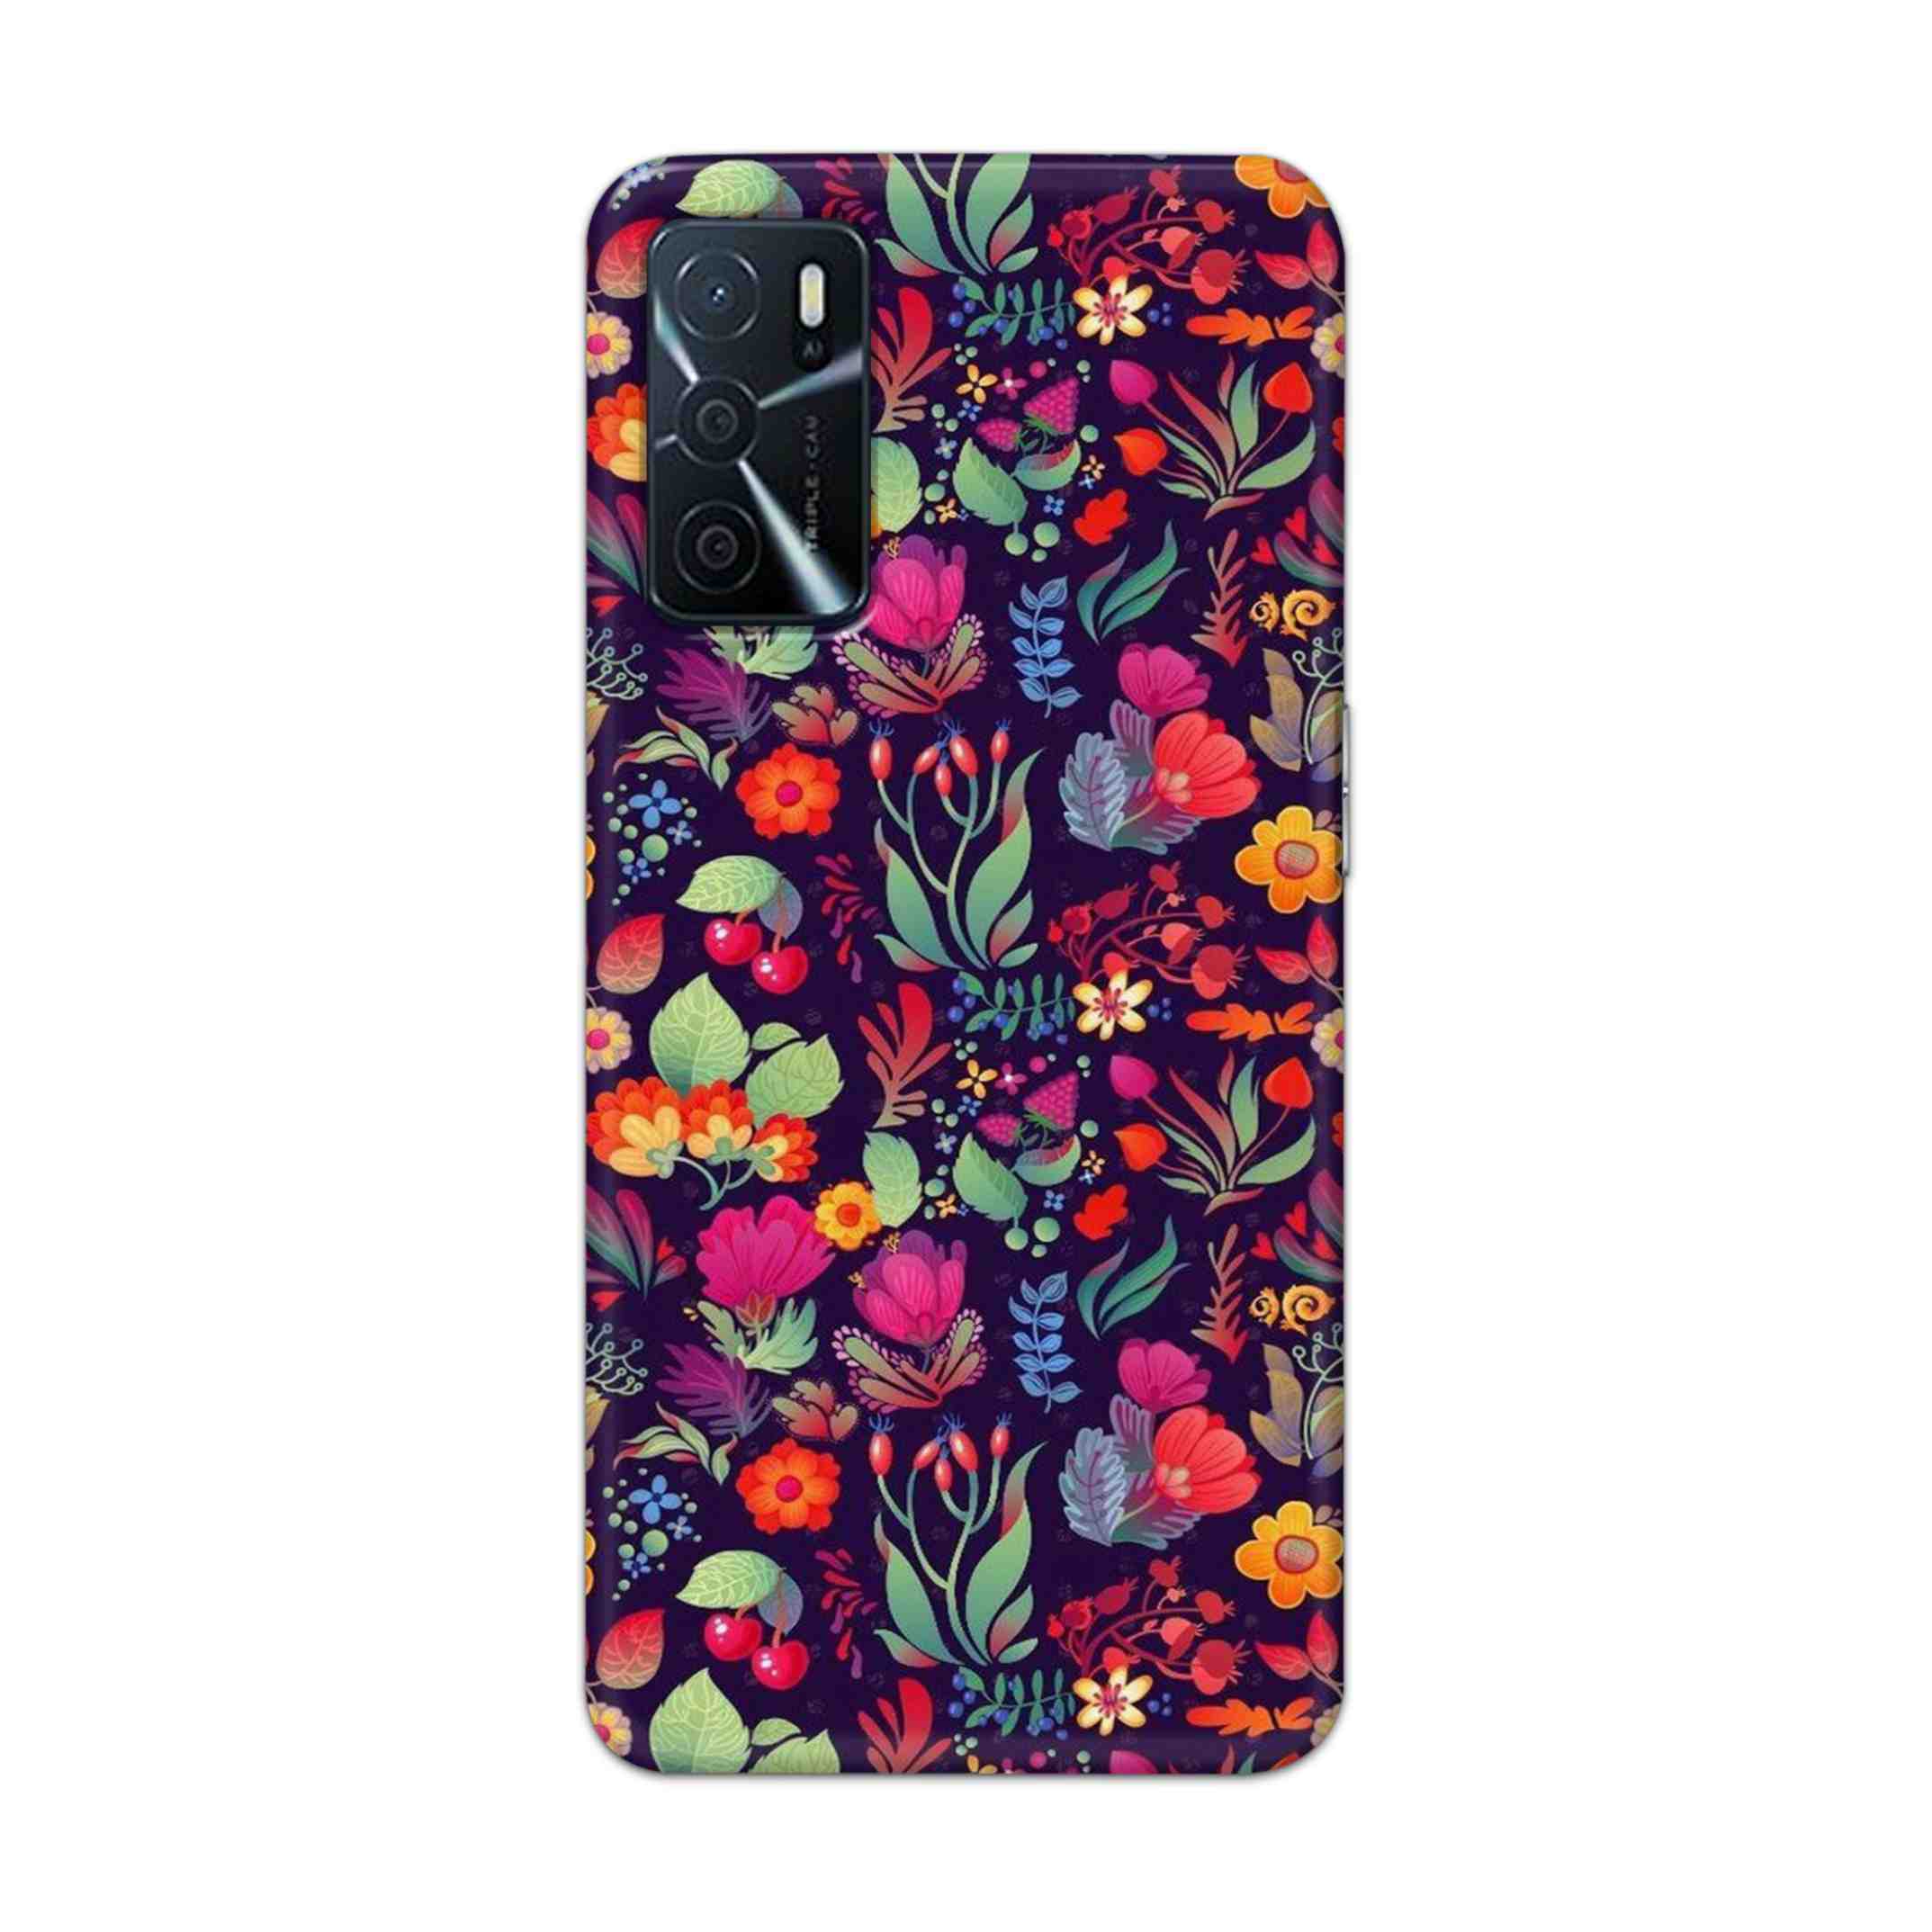 Buy Fruits Flower Hard Back Mobile Phone Case Cover For Oppo A16 Online